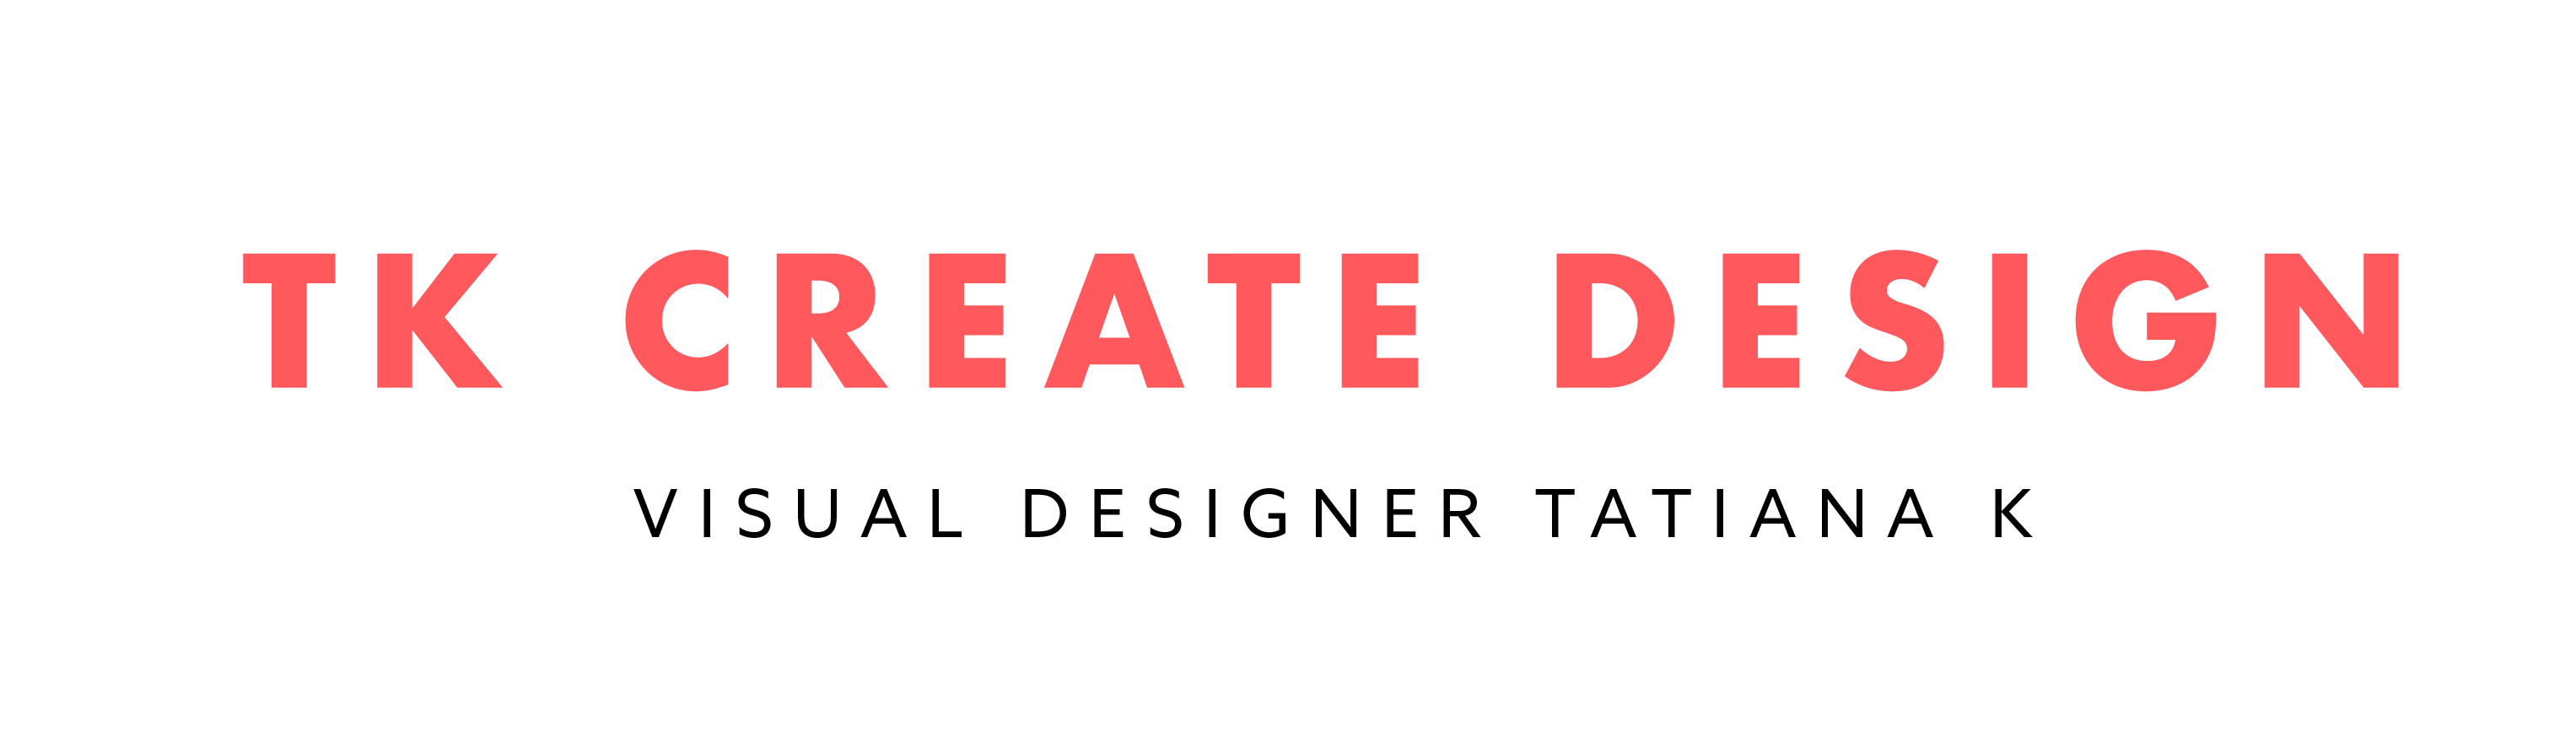 TK Create Design User Experience Designer Tatiana K Logo